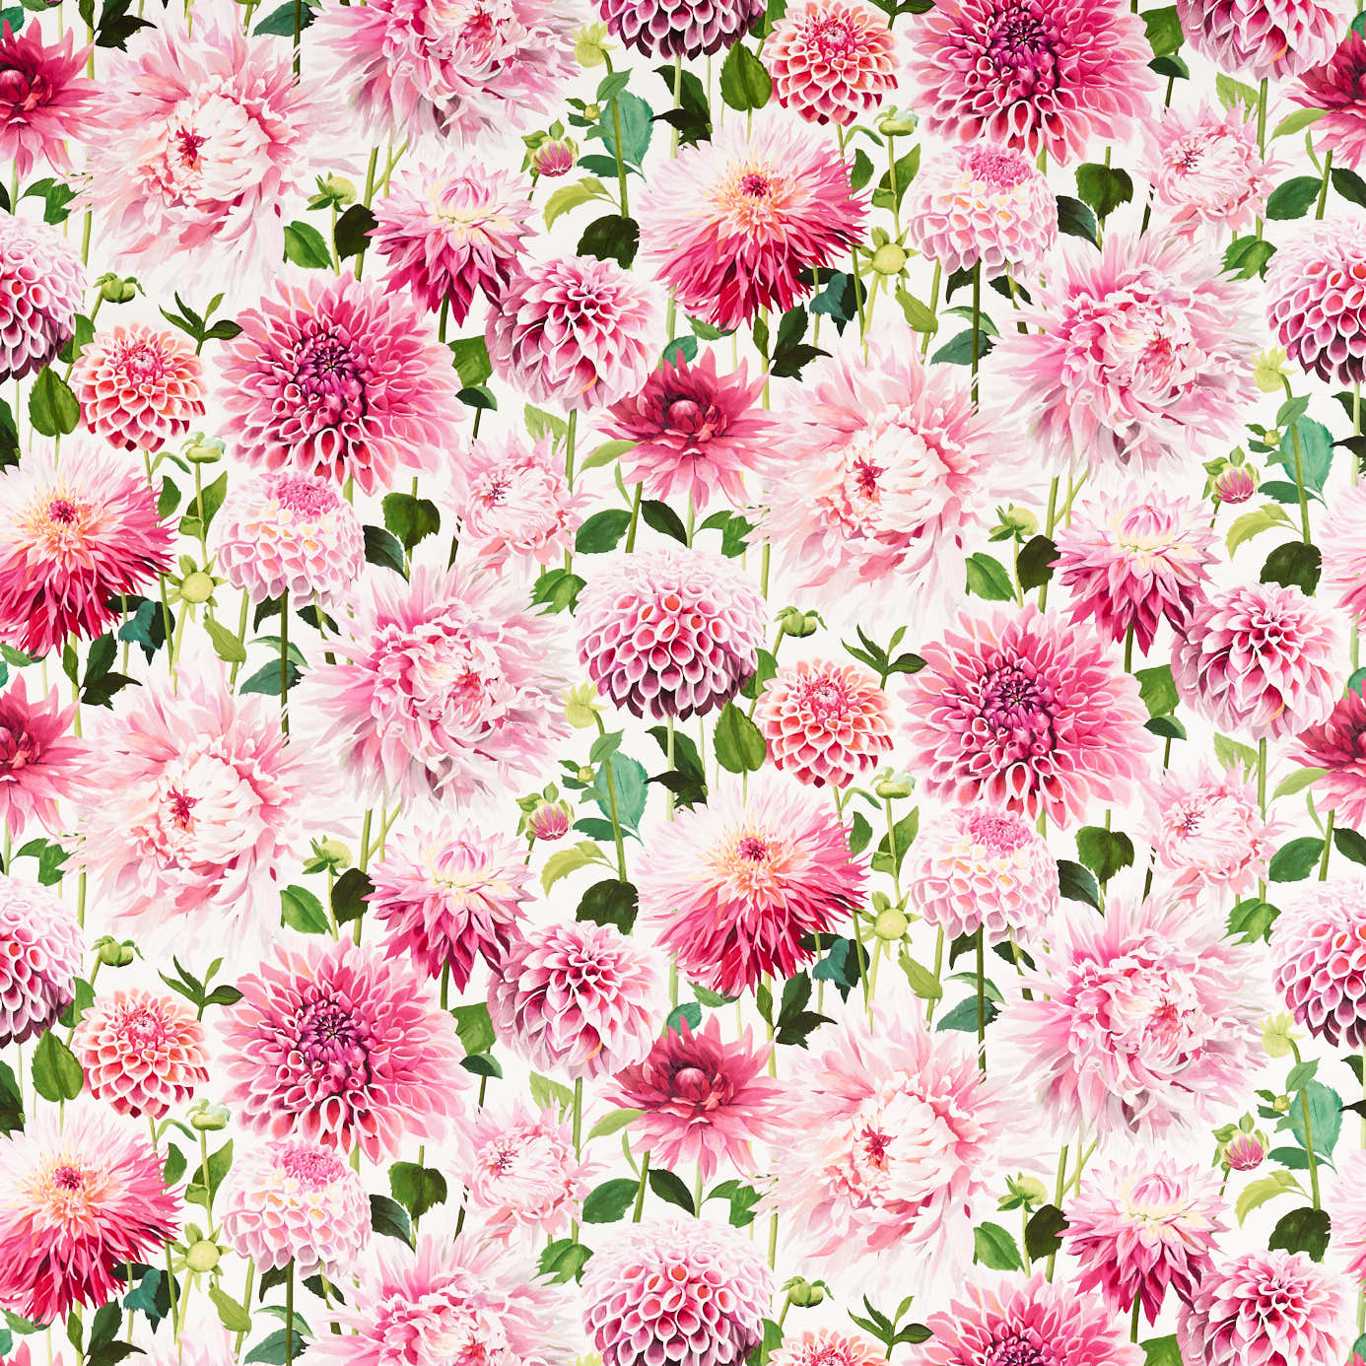 Dahlia Fabric by Harlequin - HQN2121081 - Blossom/Emerald/New������������������Beginnings